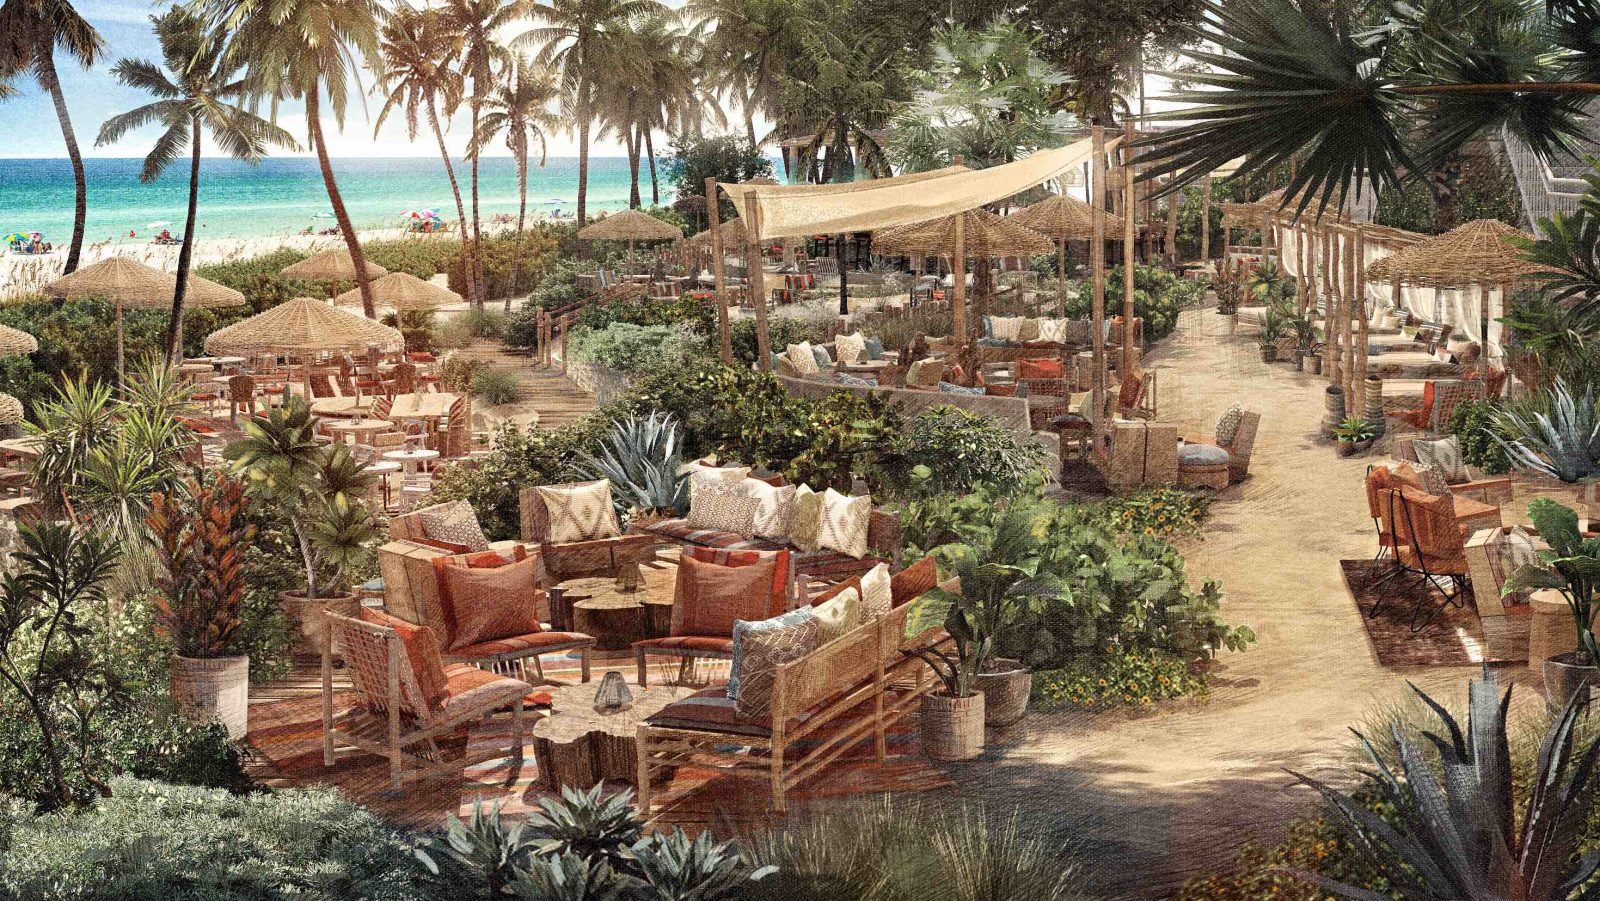 1 Hotel South Beach Launches Tulum-Inspired 1 Beach Club + New Restaurant, Wave